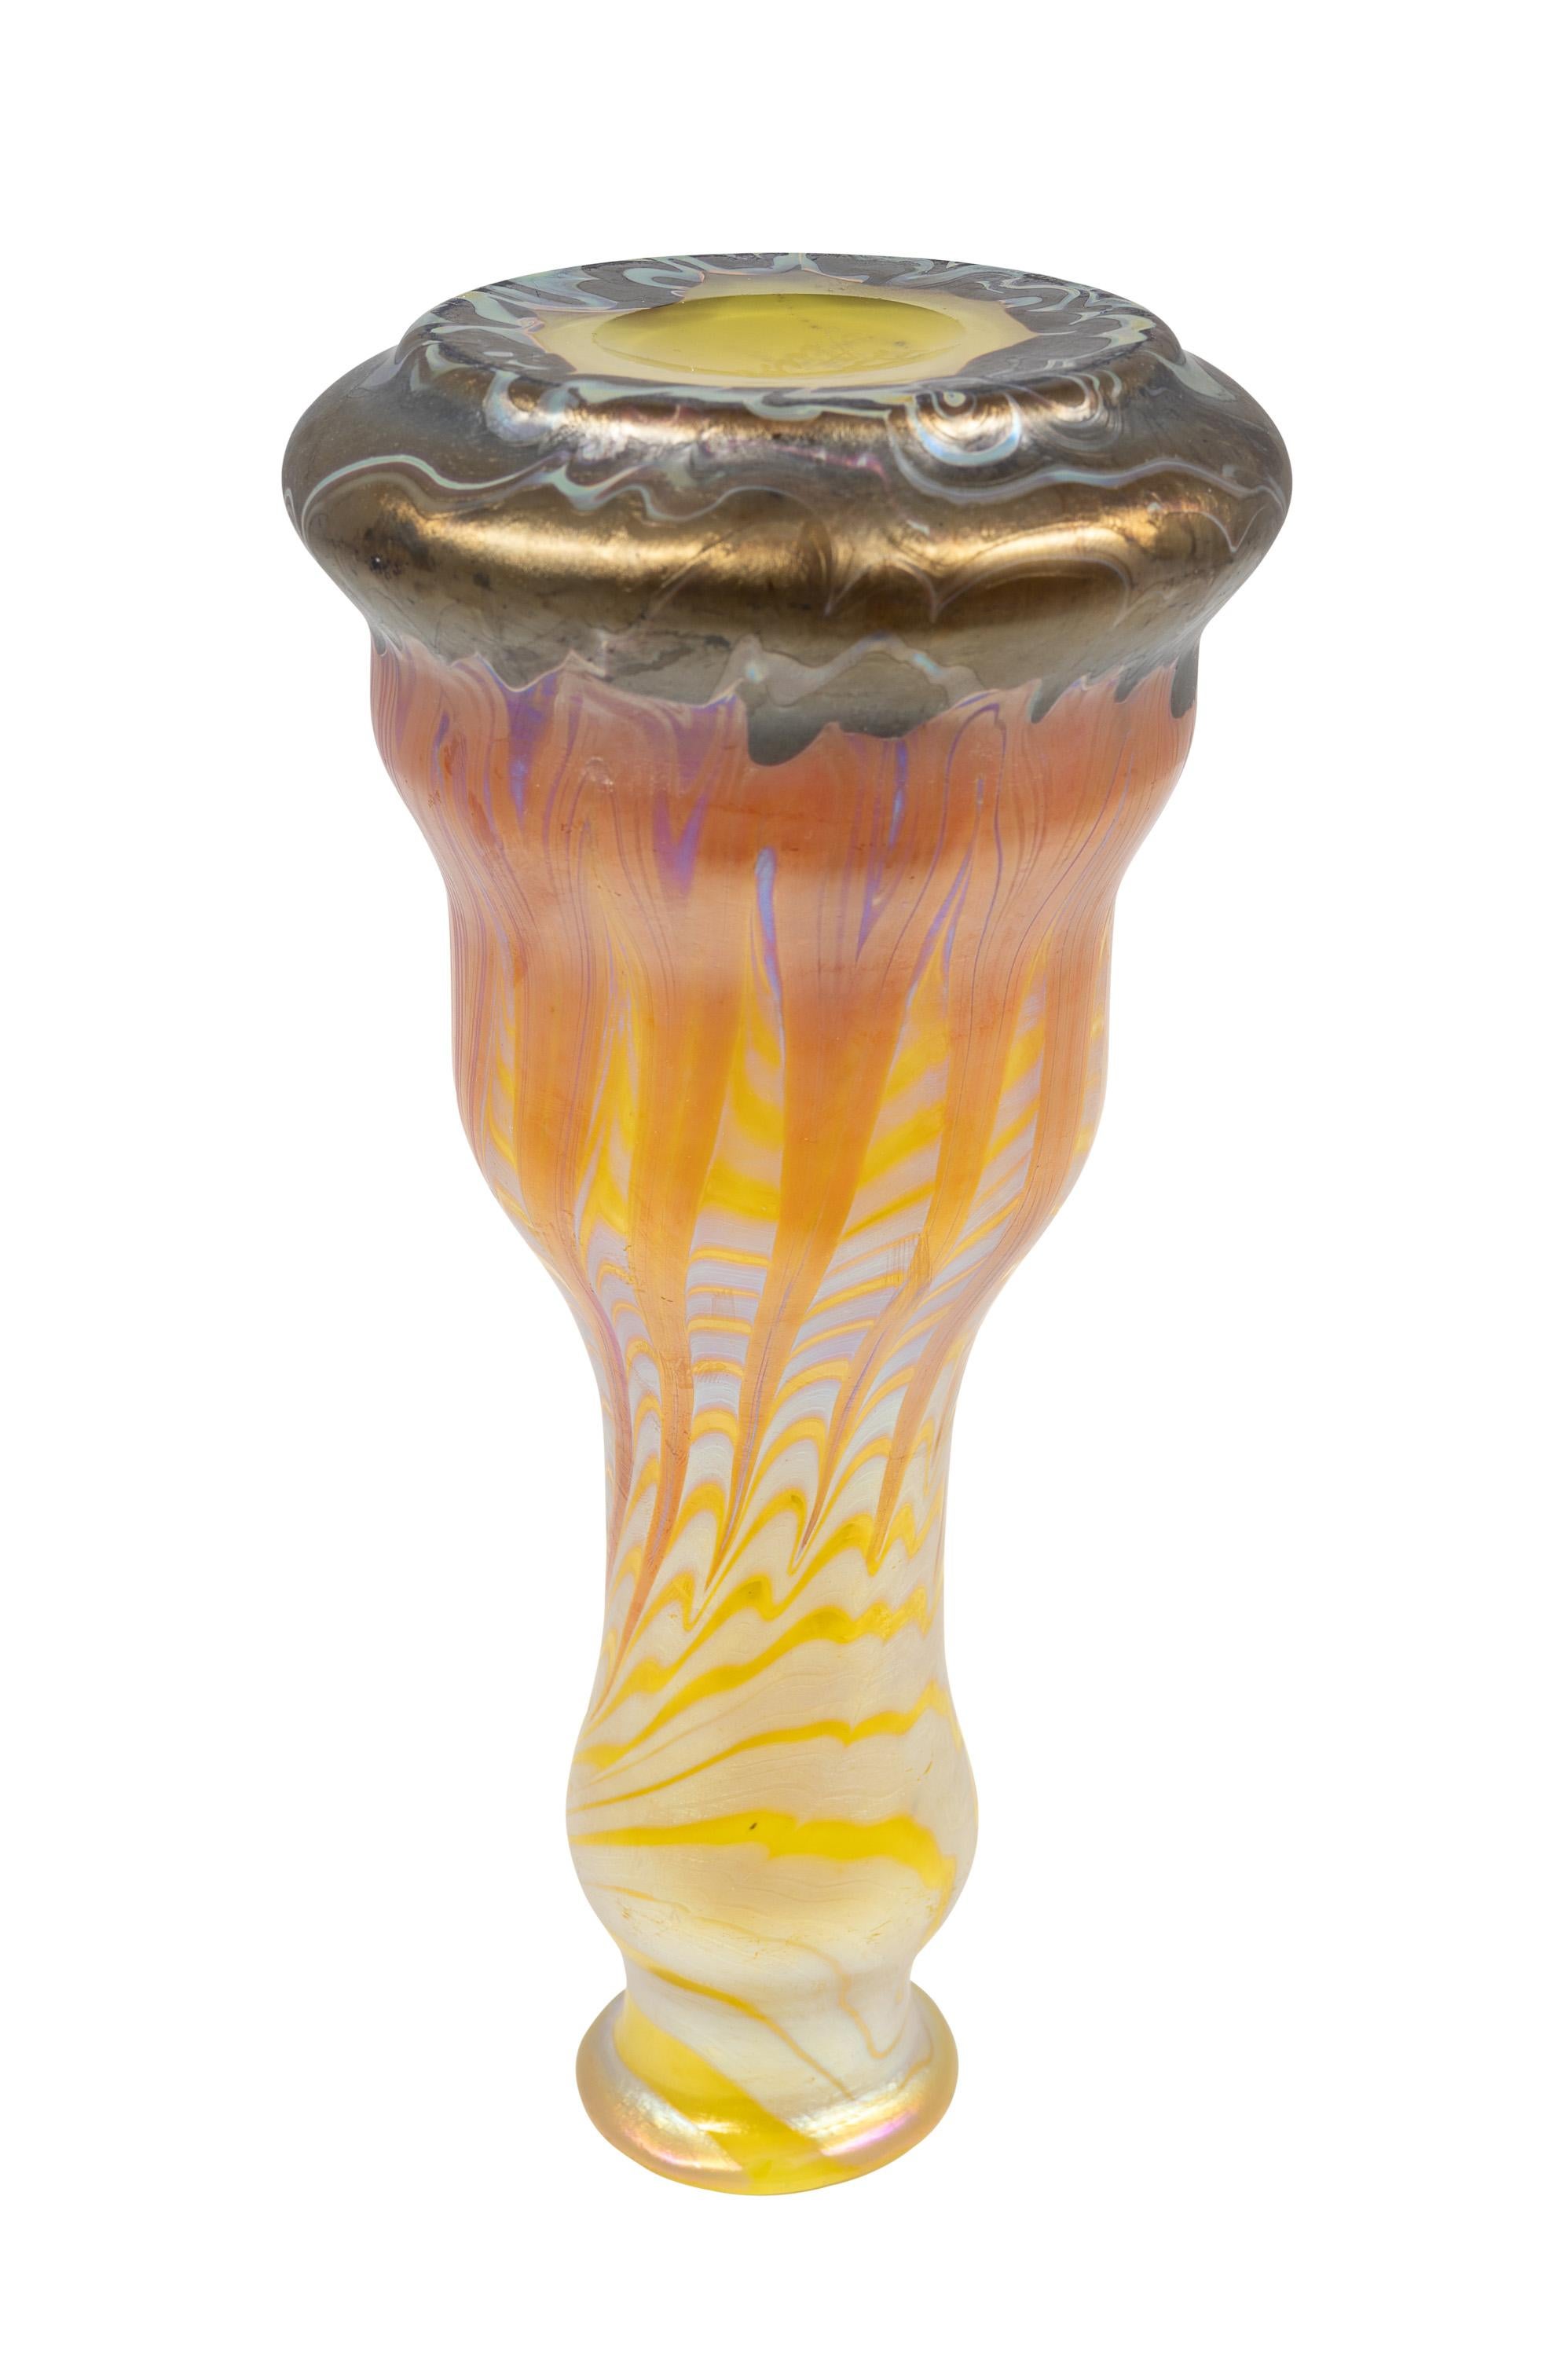 20th Century Signed Glass Vase Loetz circa 1900 Art Nouveau Jugendstil Bohemia Yellow Orange For Sale